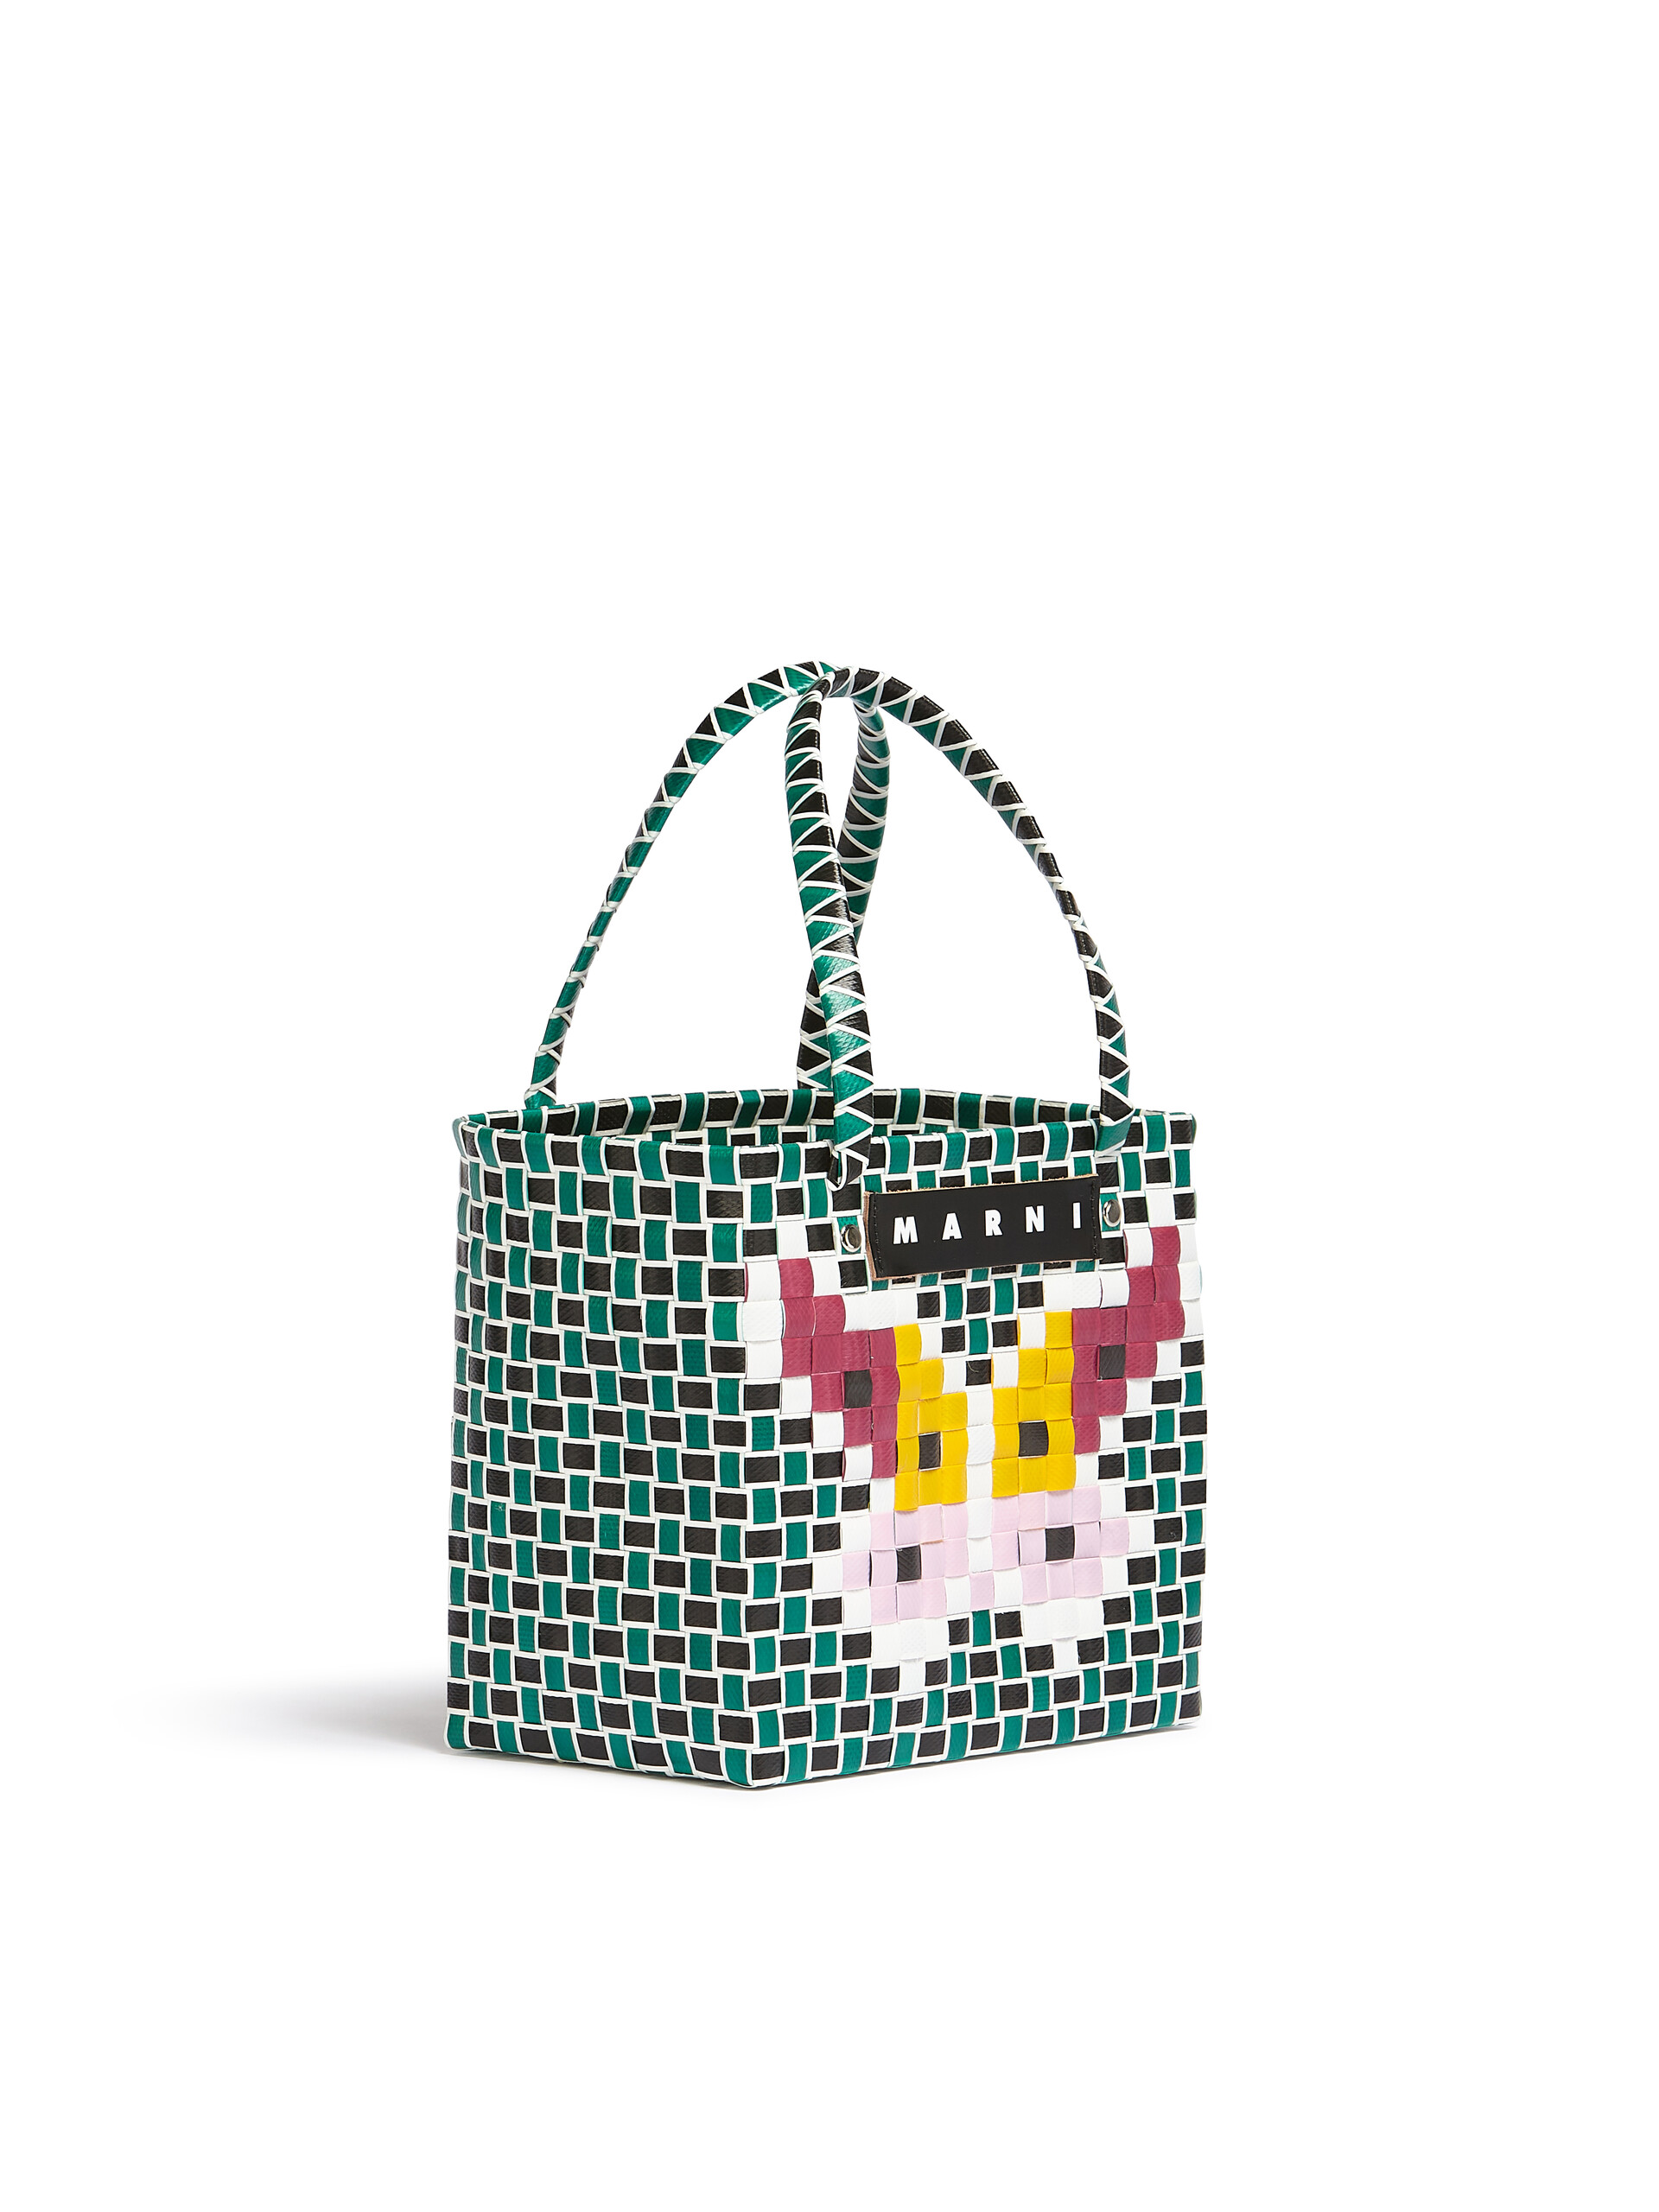 MARNI MARKET FLOWER BASKET bag in green butterfly motif - Bags - Image 2